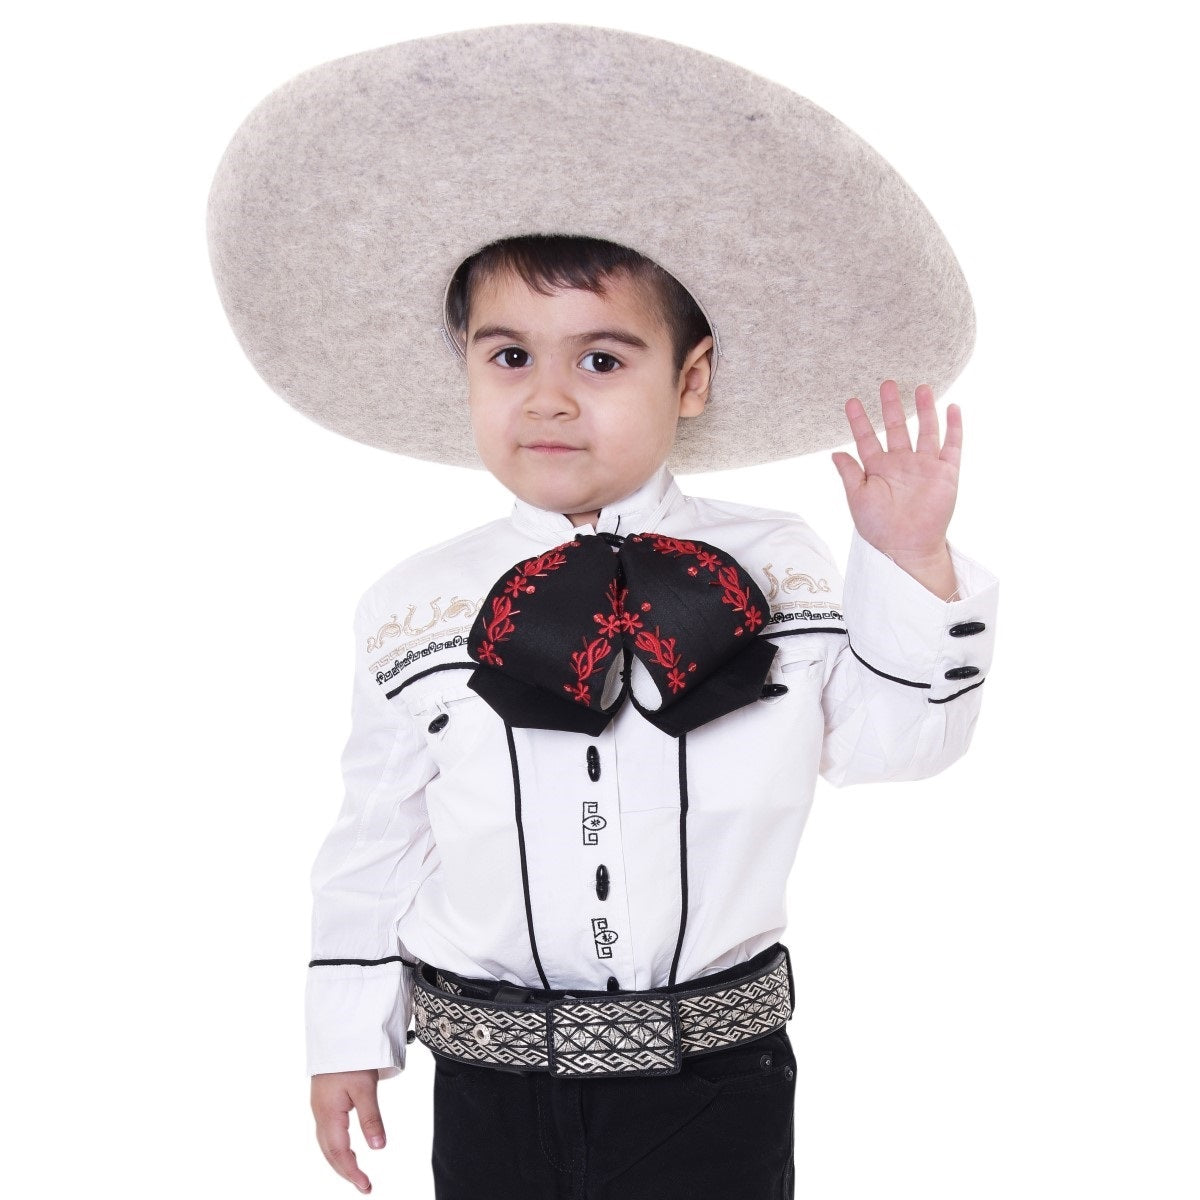 Camisa de Charro para Niño KS-TM-WD072-938 - Charro Shirt for Kids